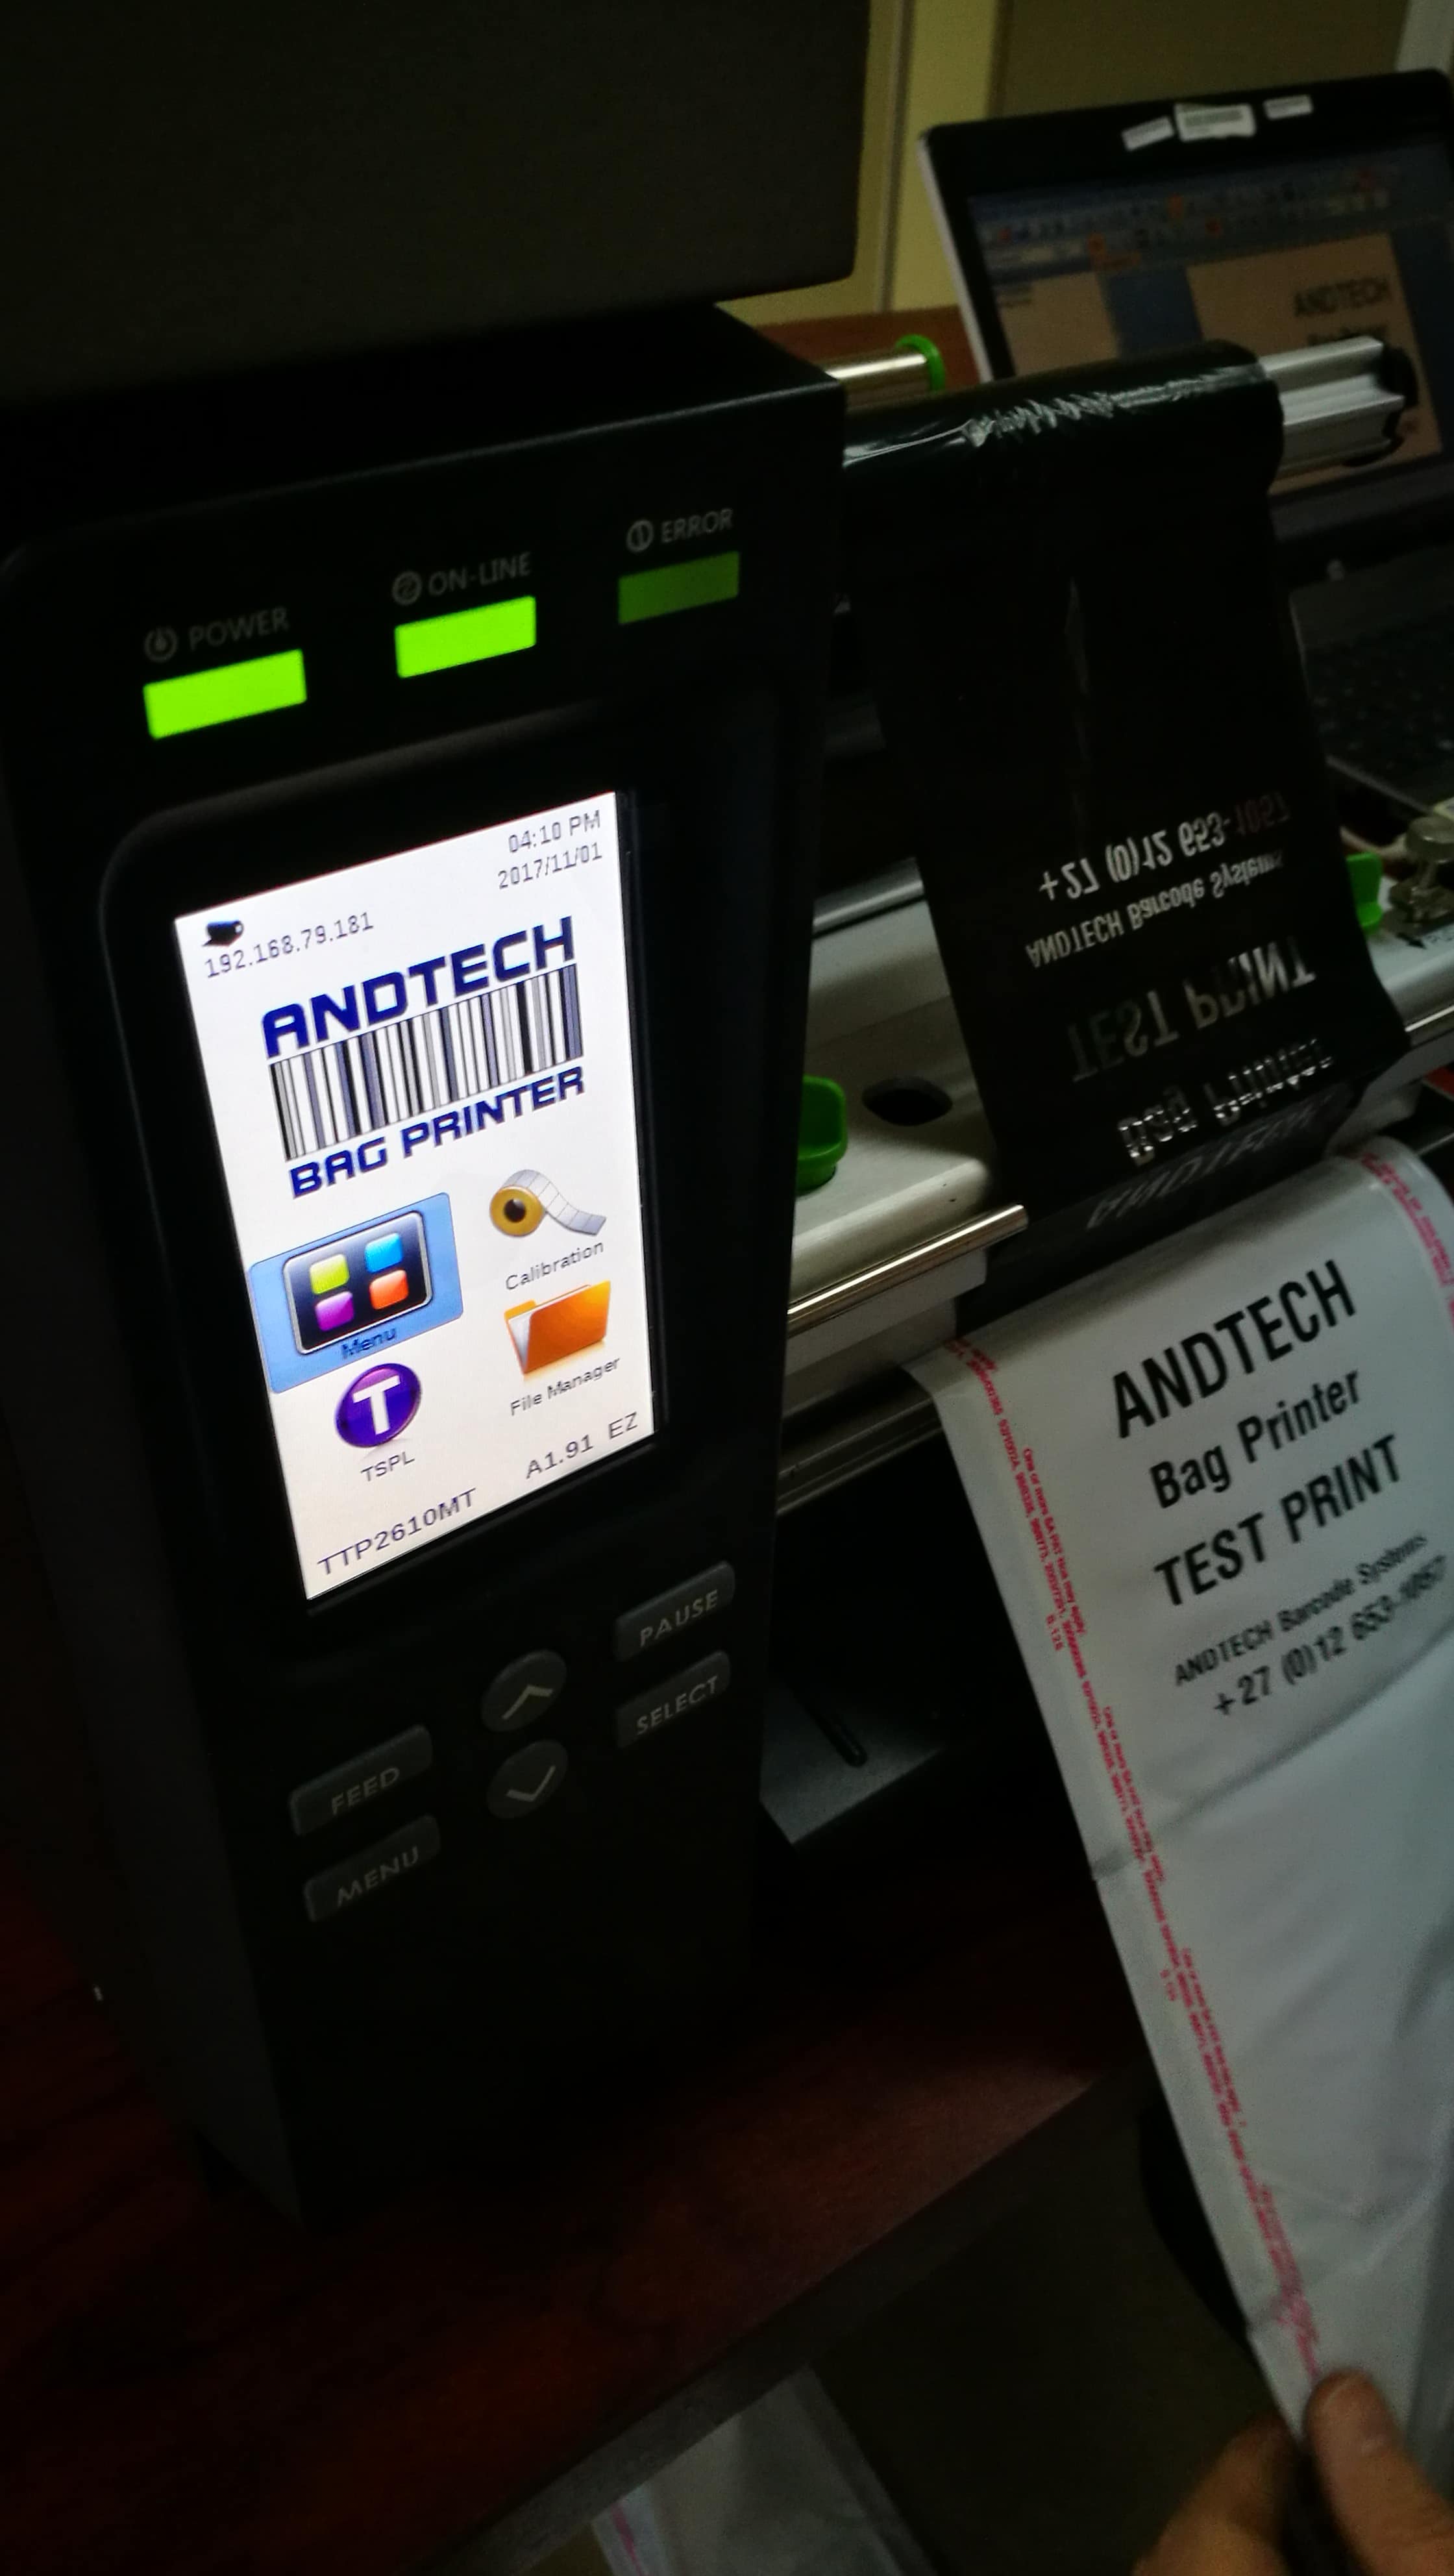 Andtech Bag printer